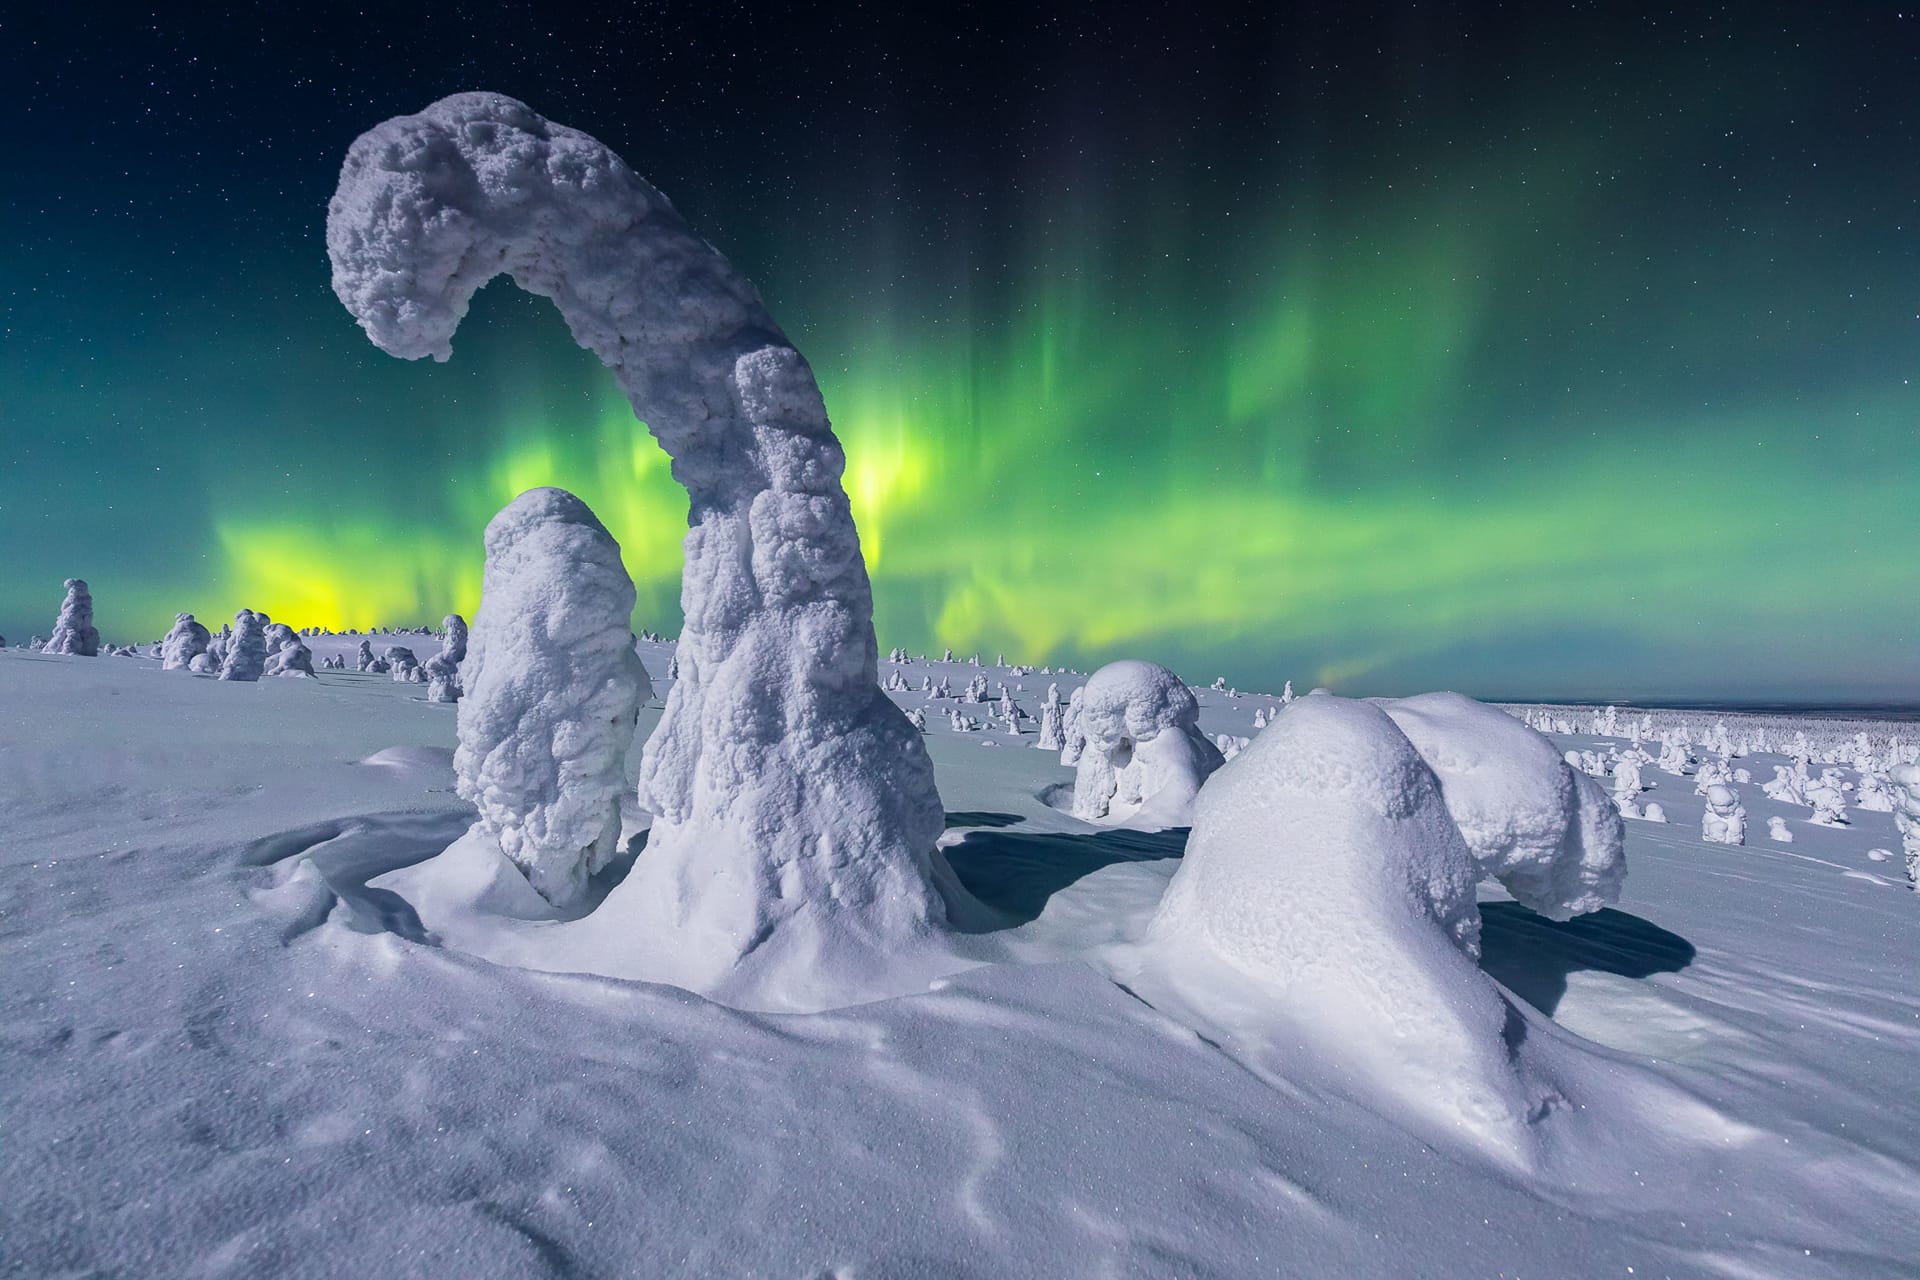 Best Northern Lights images Finland 